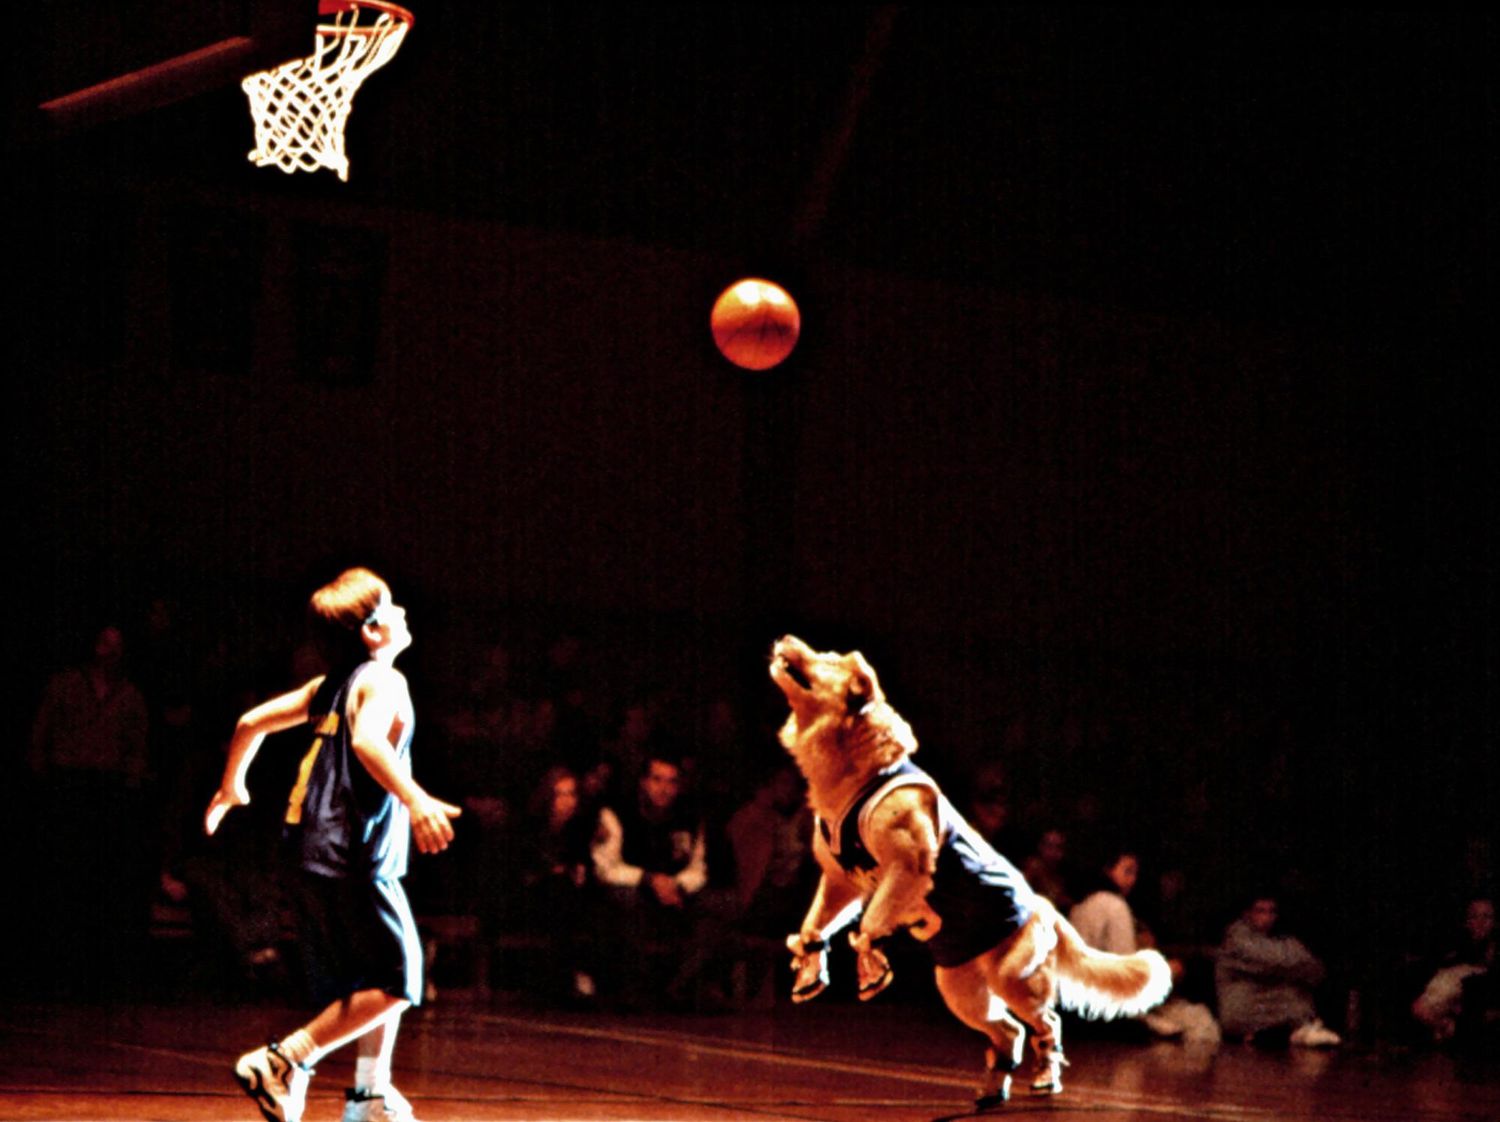 AIR BUD, Buddy, the golden retriever, playing basketball, 1997.